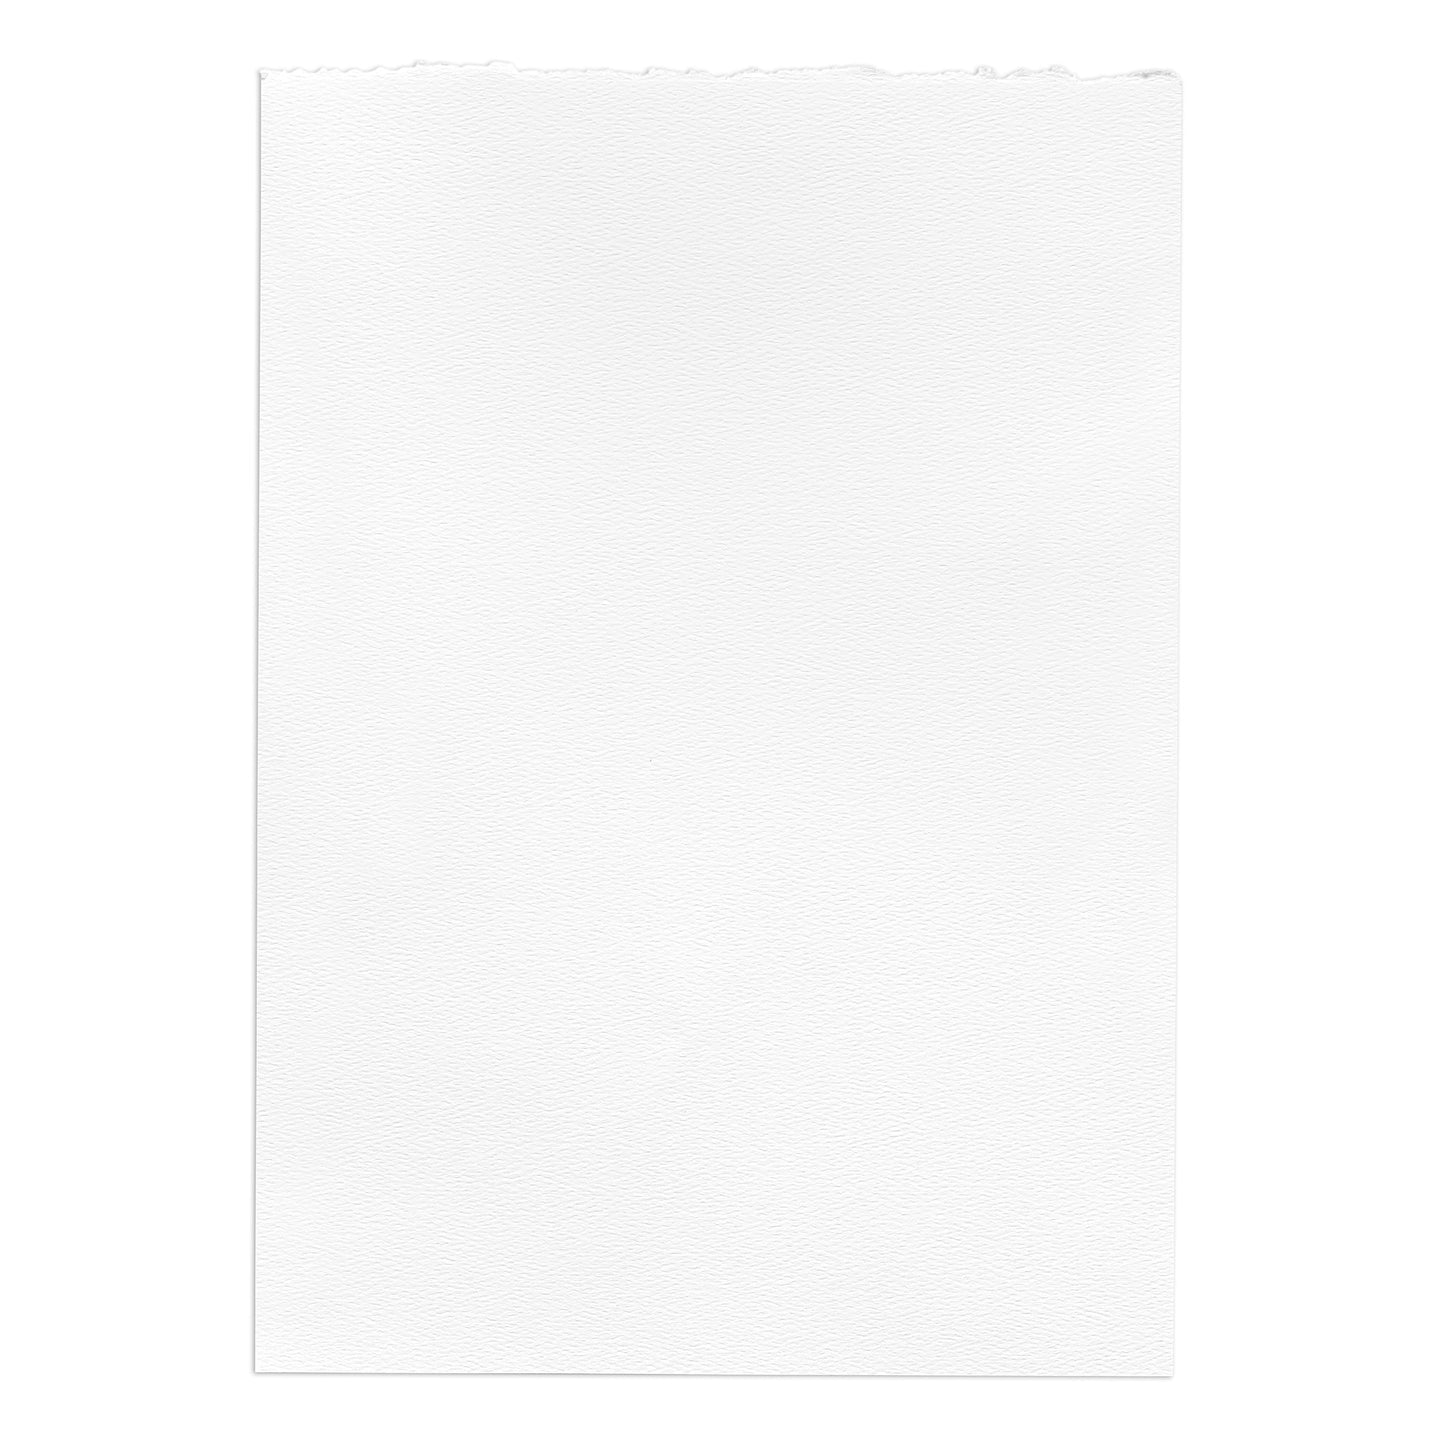 Strathmore Pastelle Bright White 216g, A4